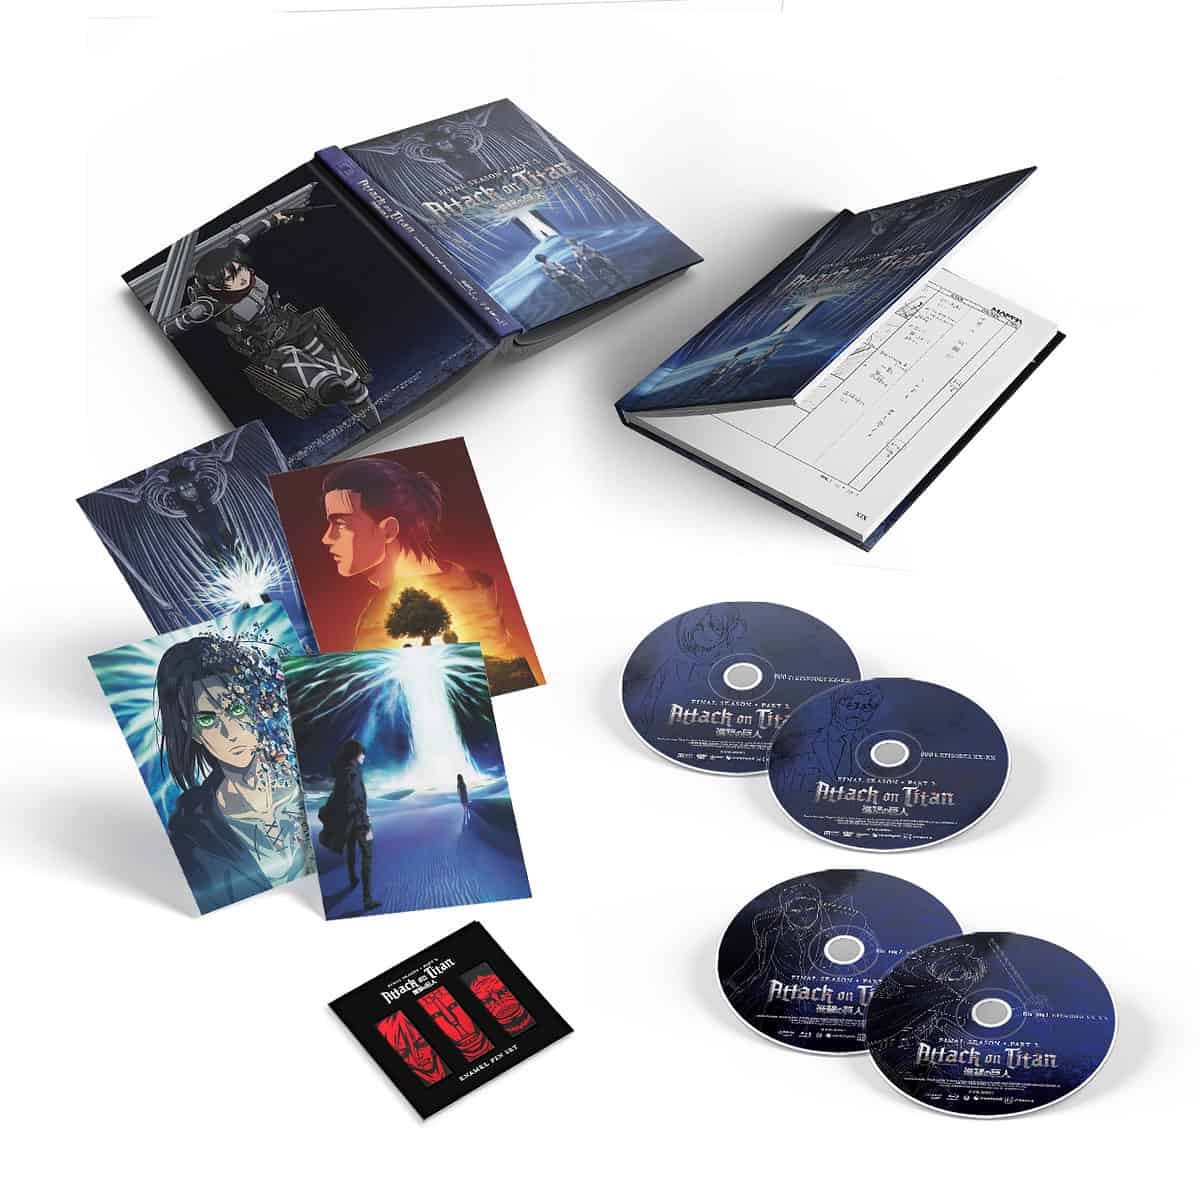 Arifureta From Commonplace to Worlds Strongest Season 2 Limited Edtion  Blu-ray/DVD